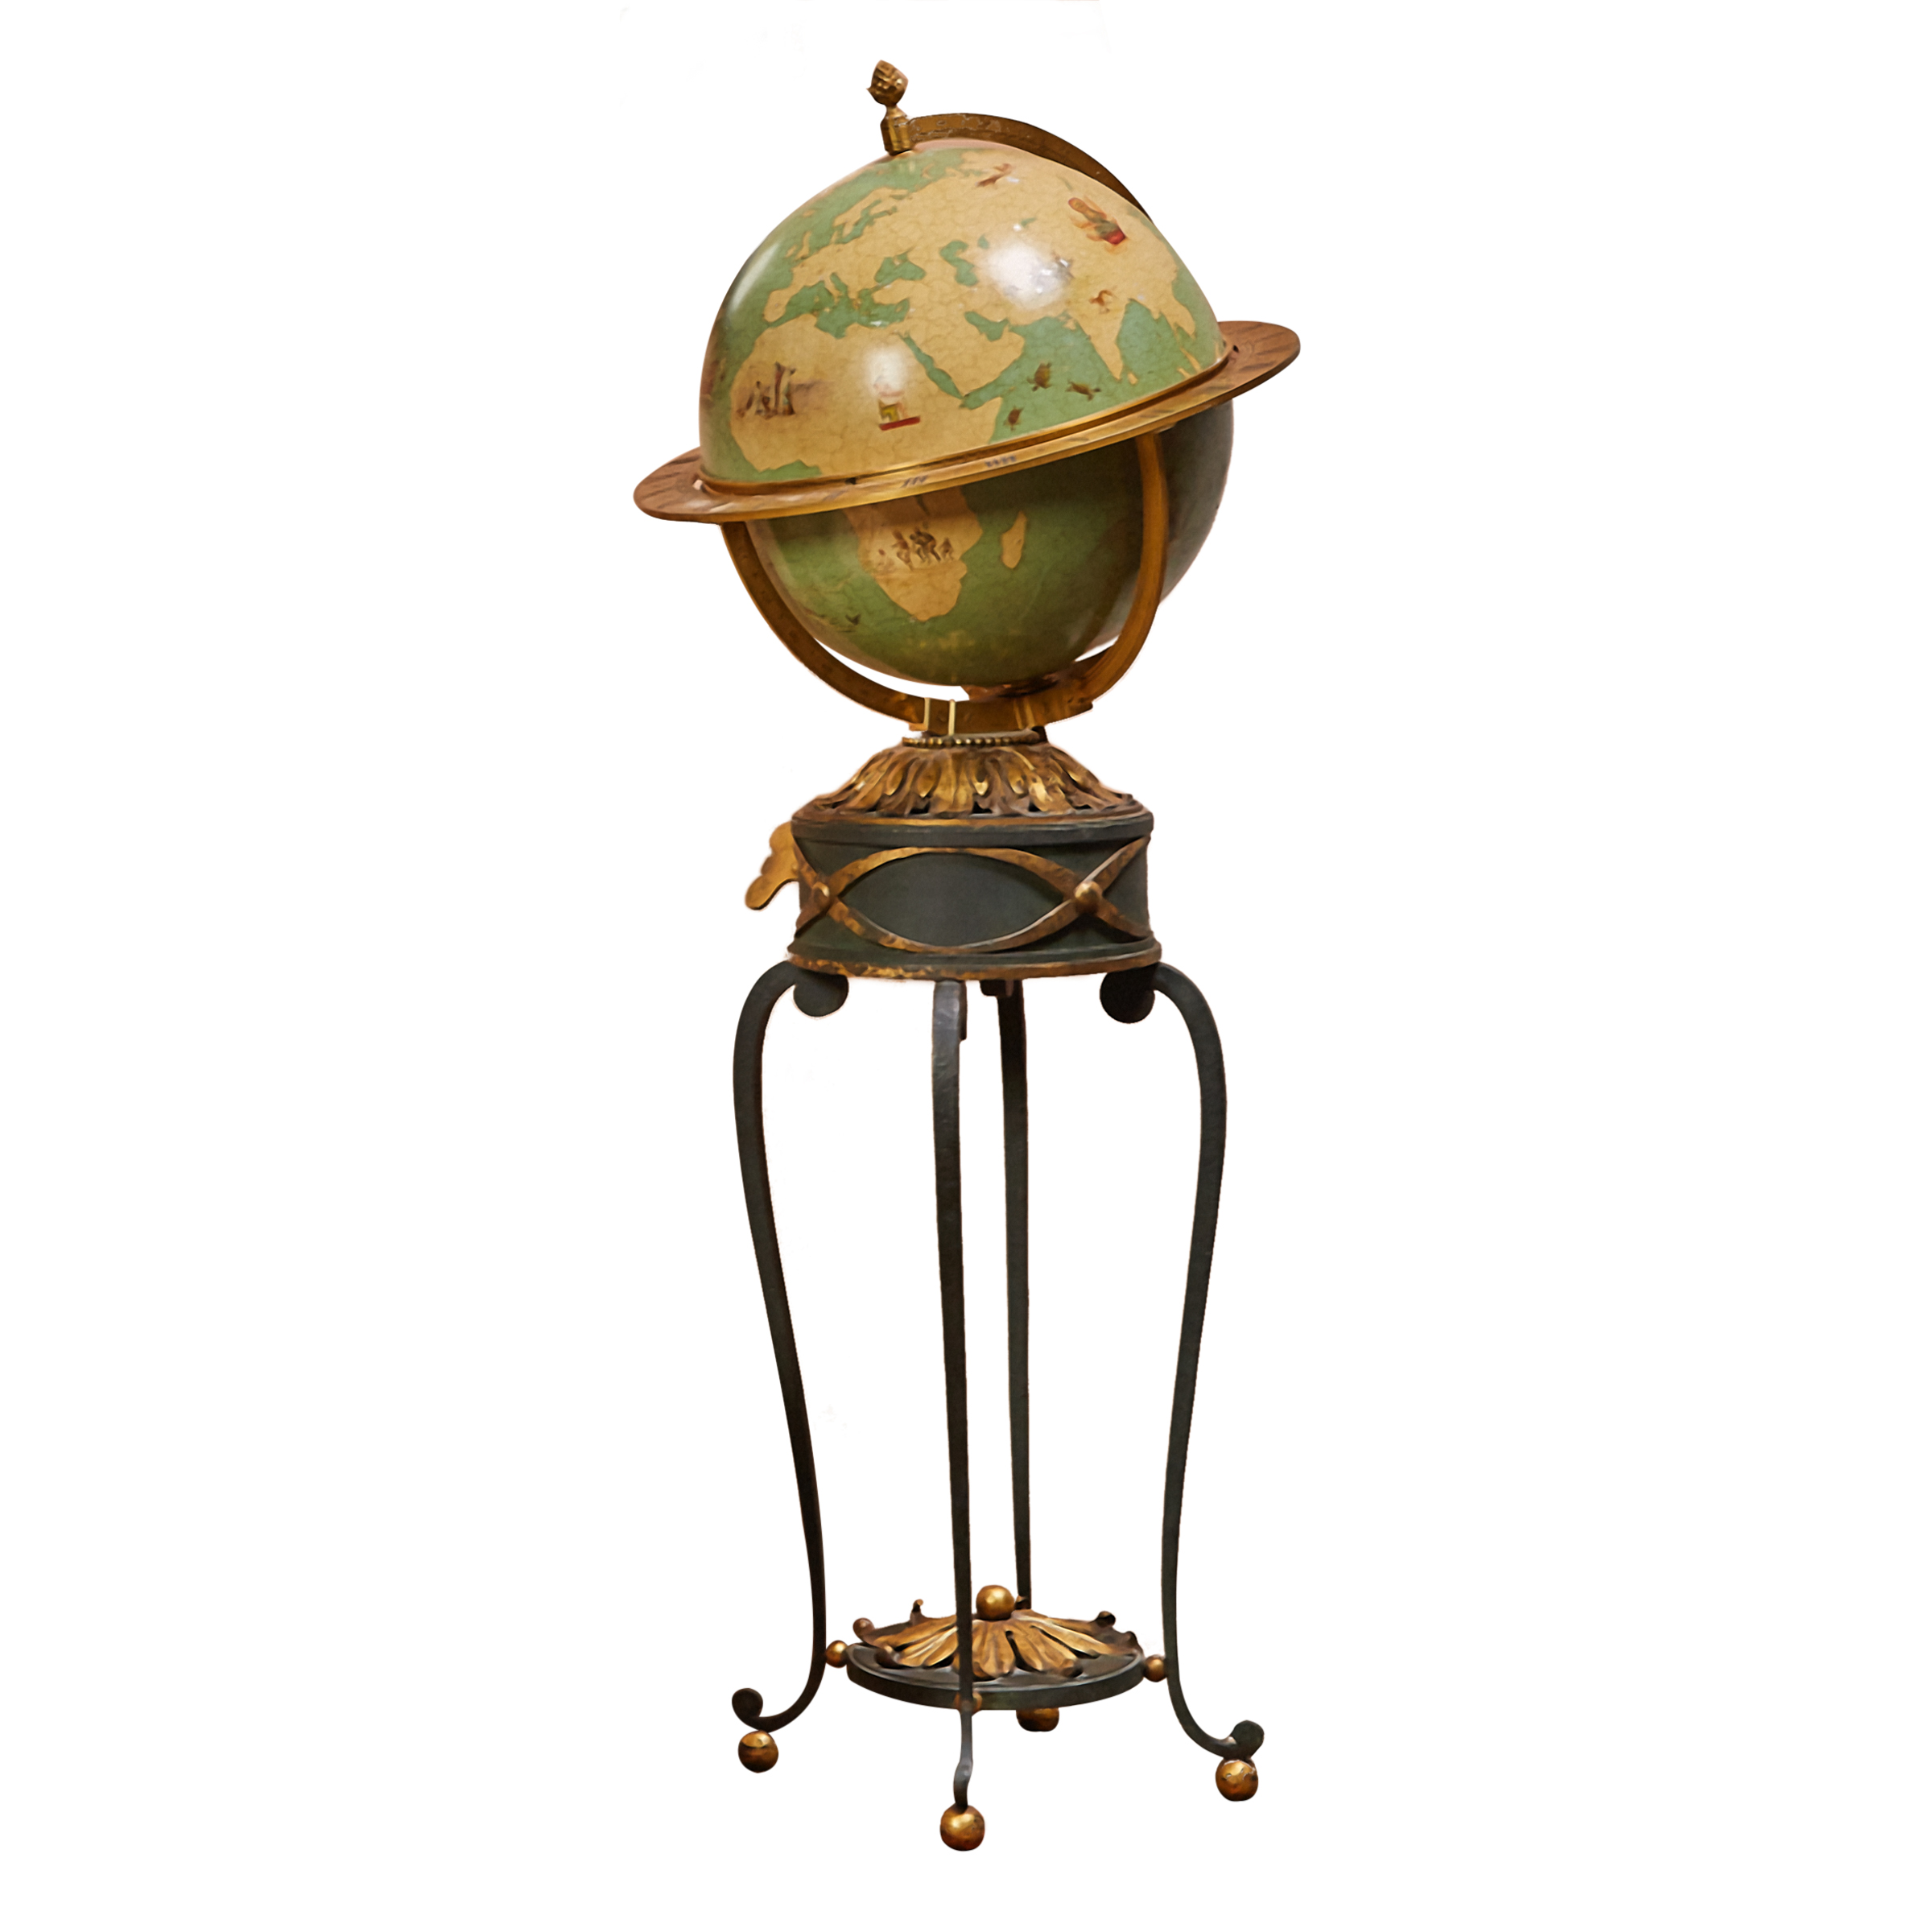 Swiss World Time Clock Globe on Stand, Eduard Gübelin, Lucerne, c.1930